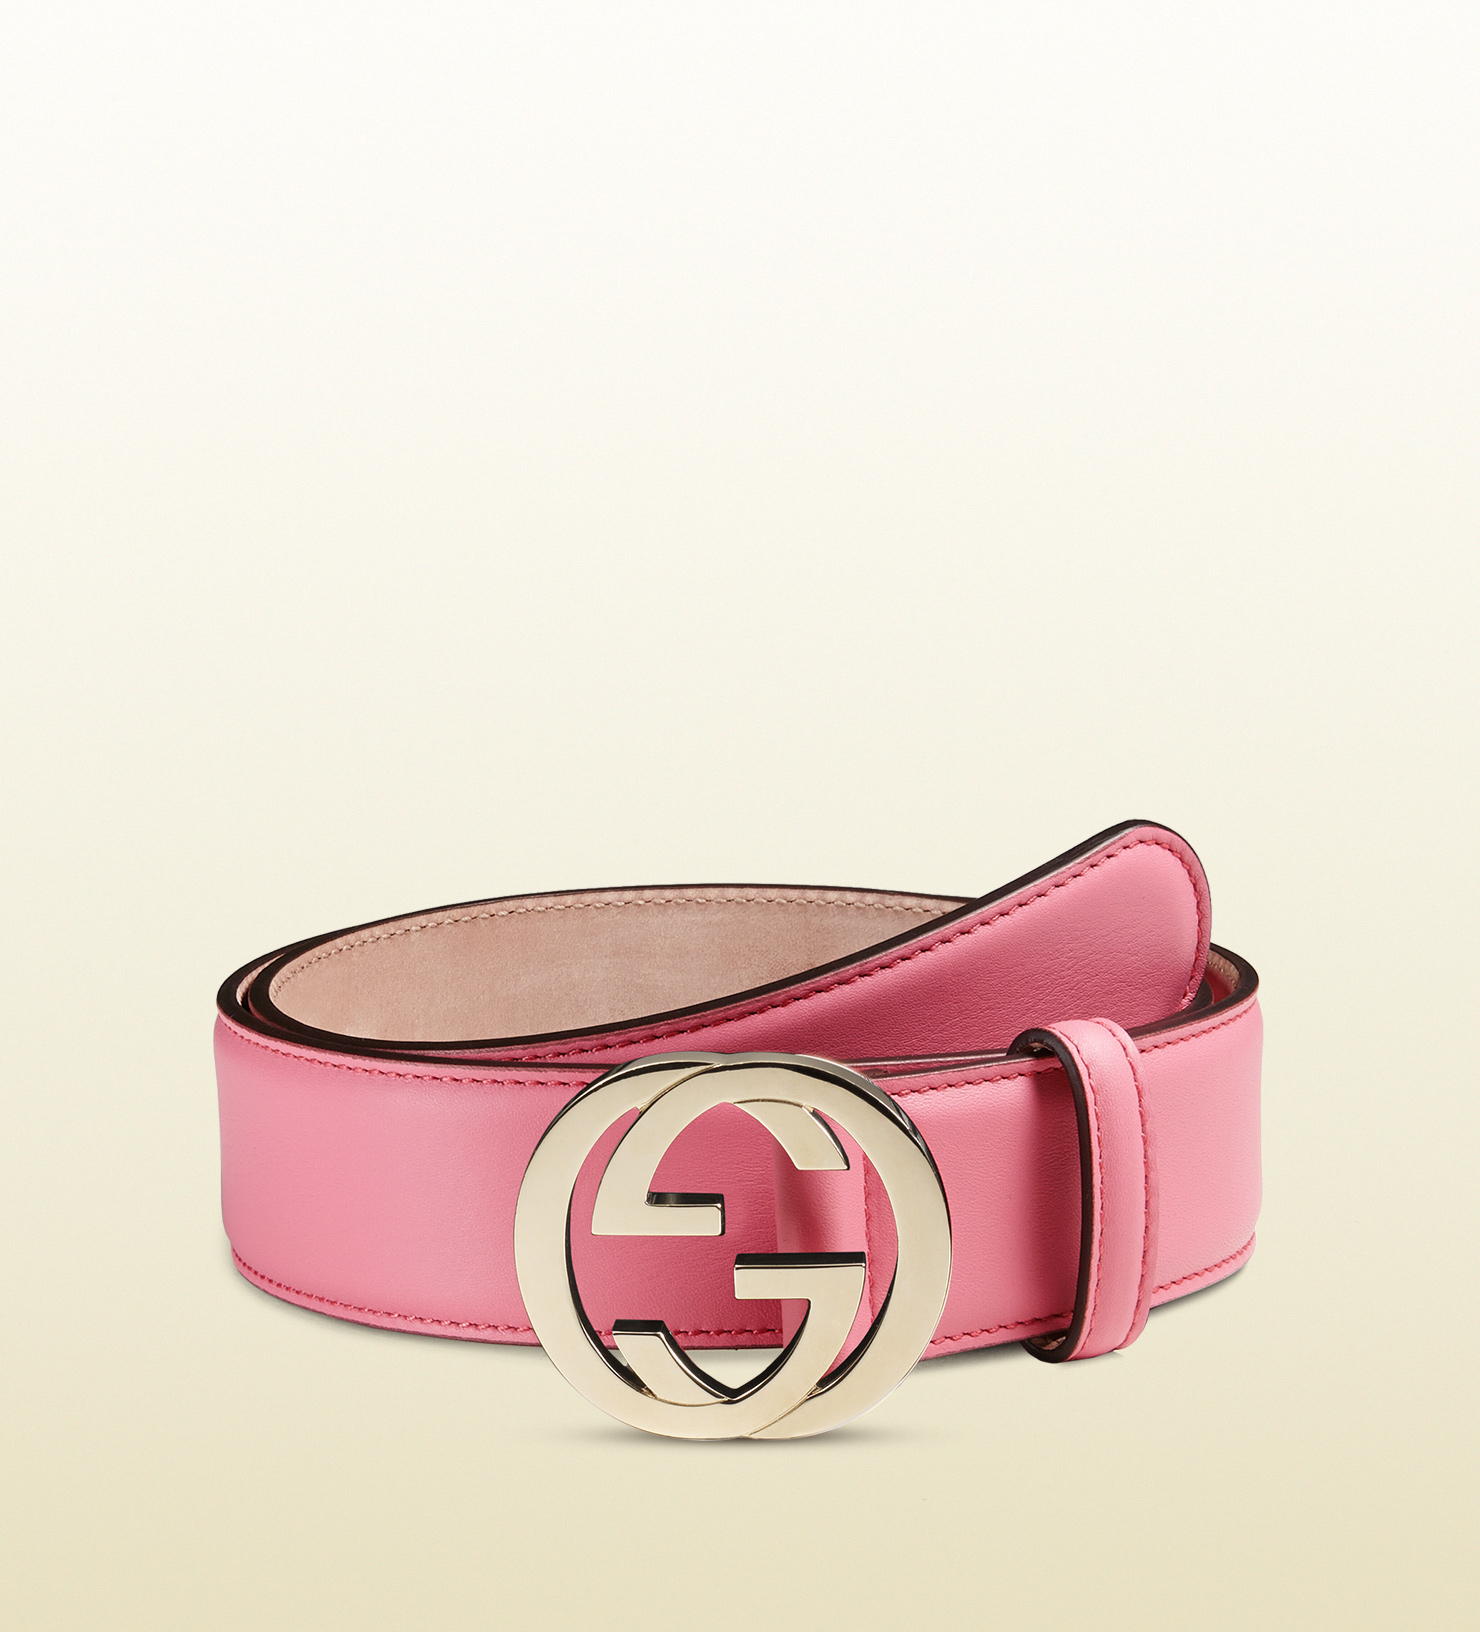 Pink Gucci Belt Outlet, 51% OFF | www.ingeniovirtual.com